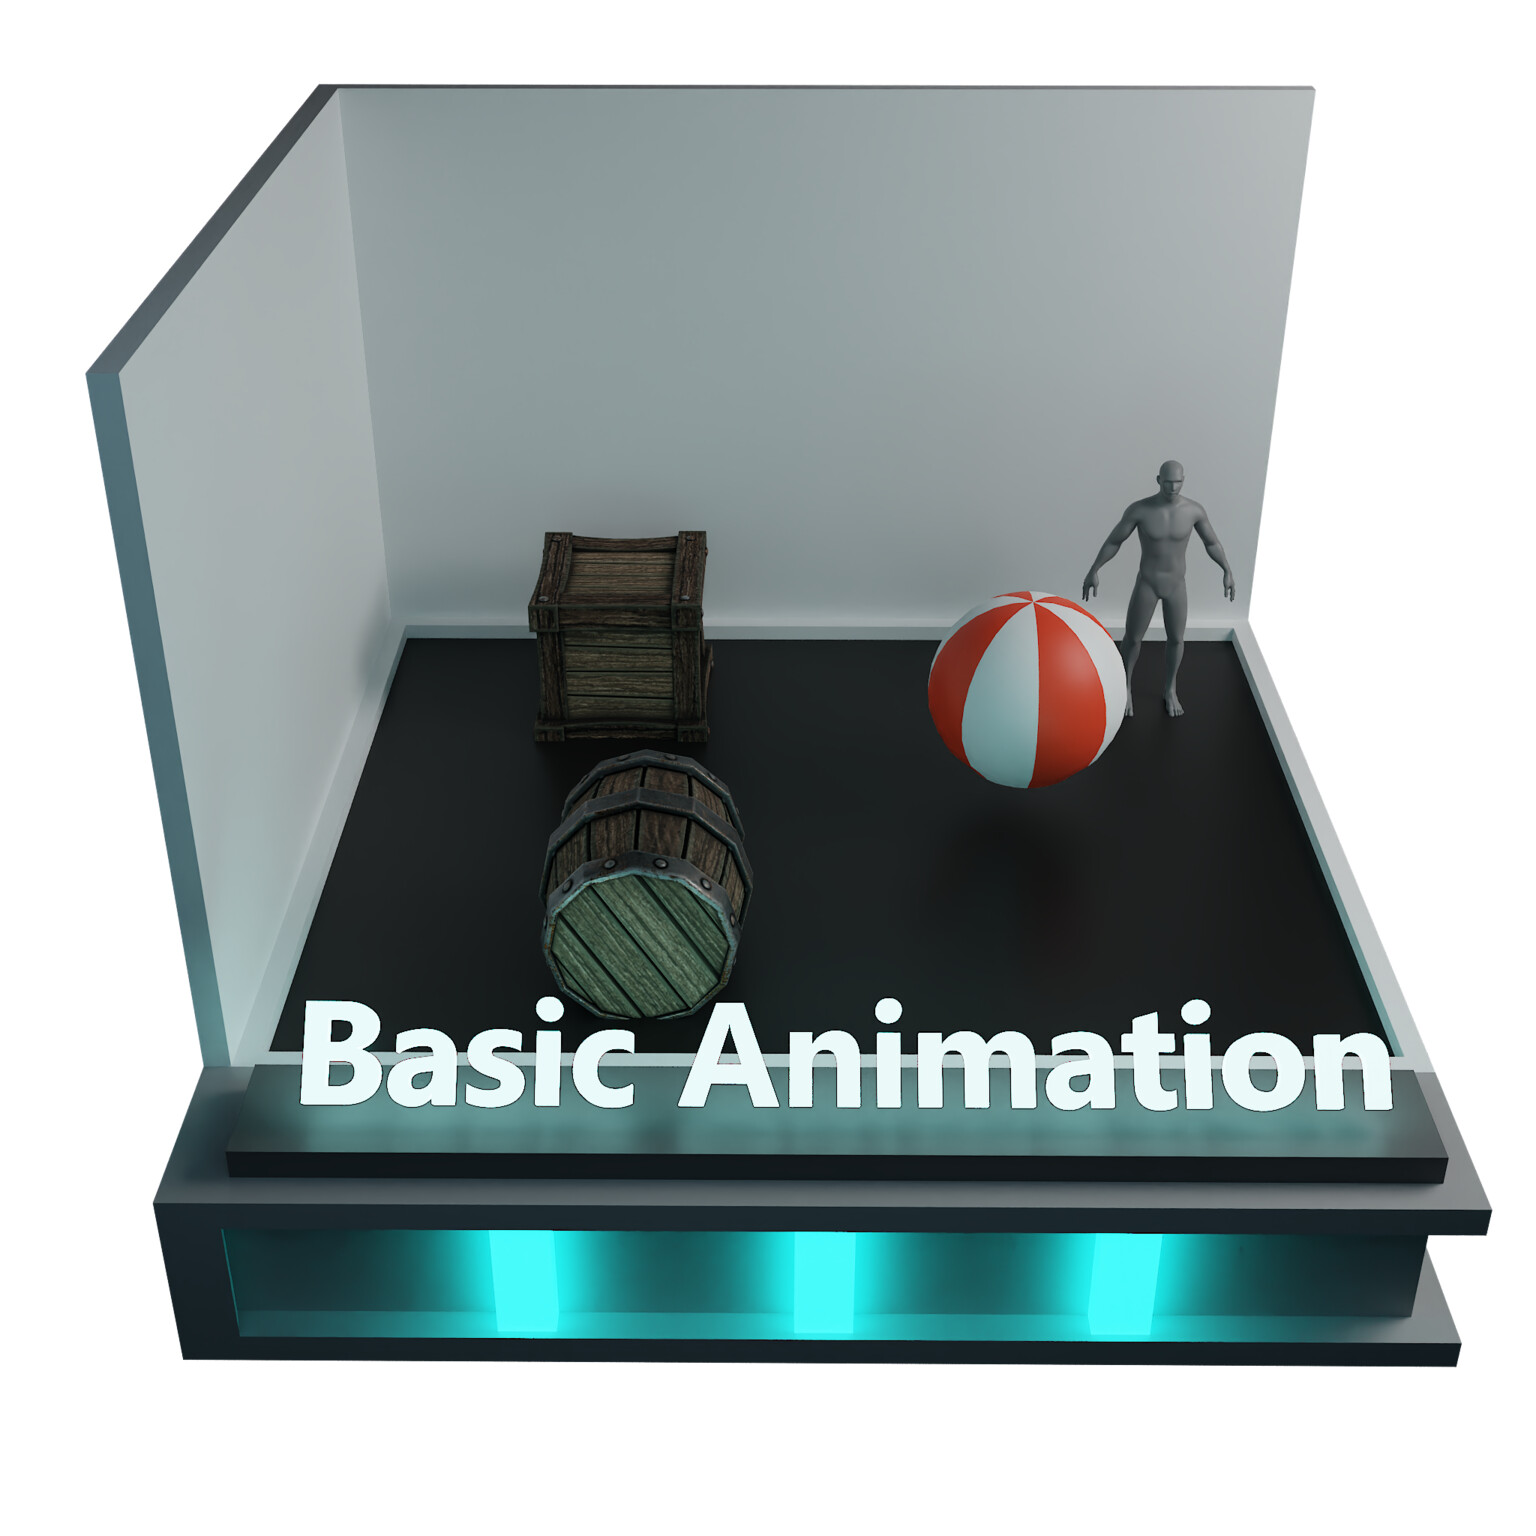 Blender 2.80 Beginners Tutorial: How To Create A Simple 3d Glitter Ball. 